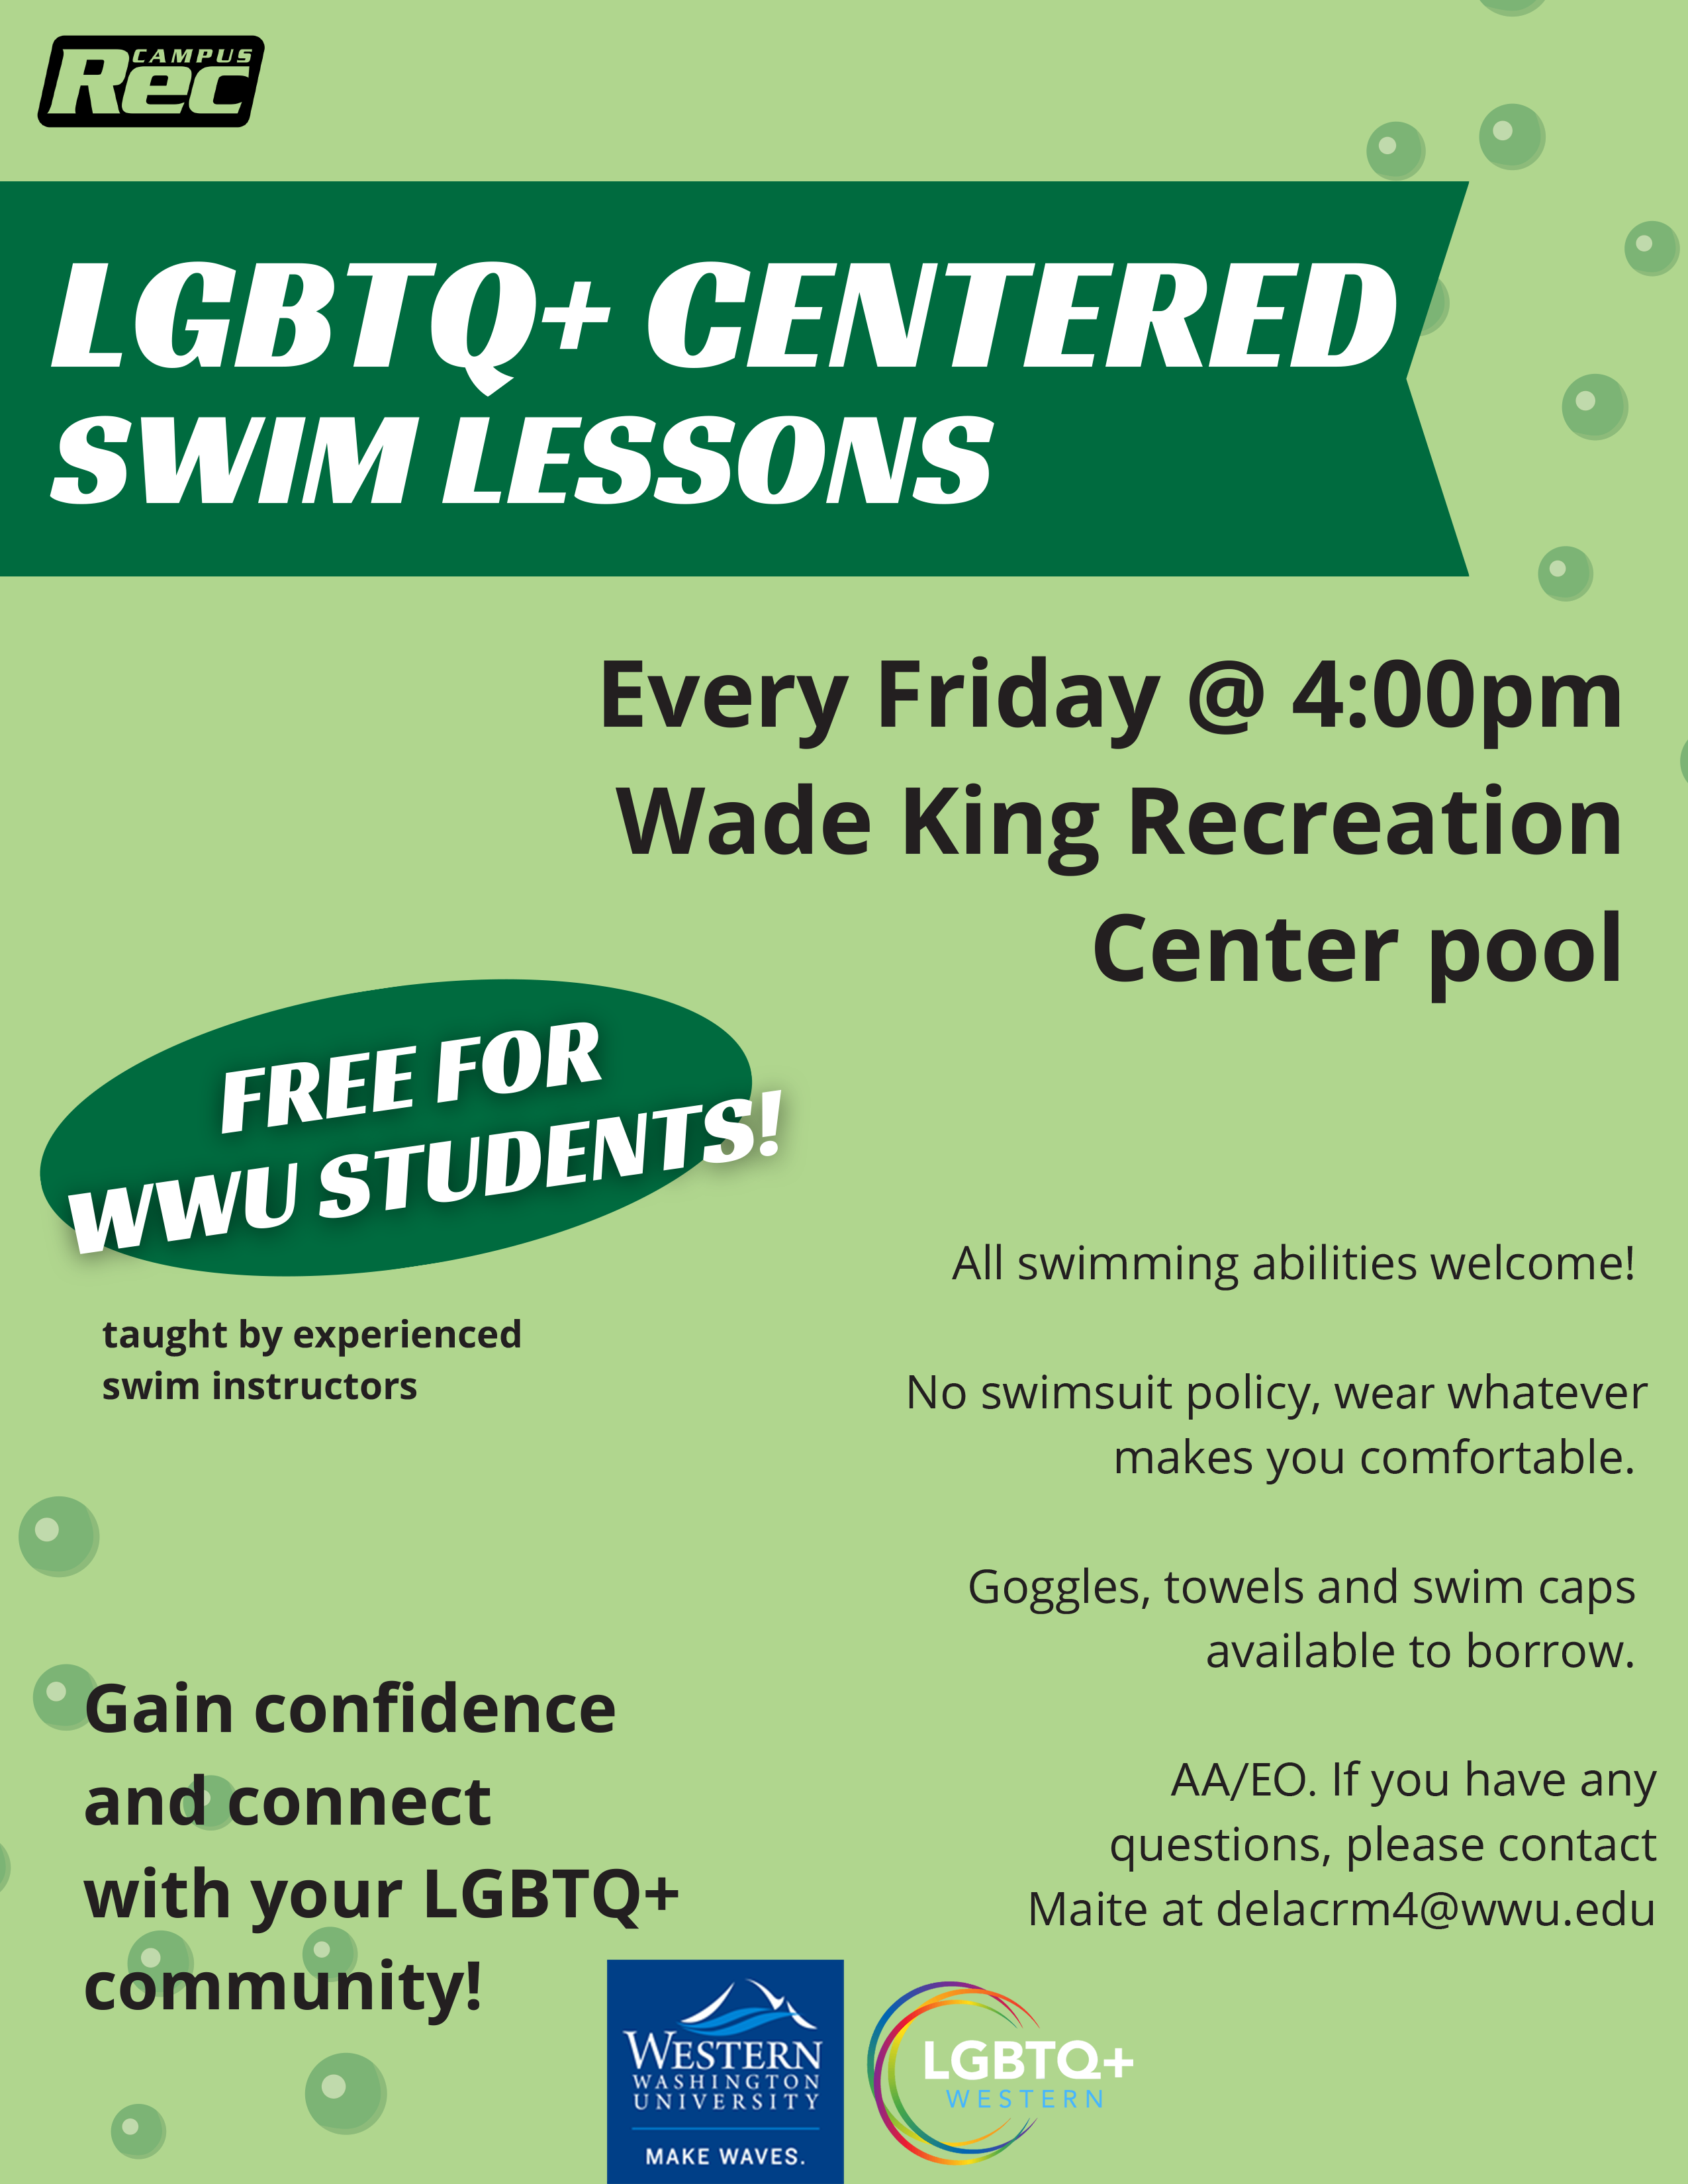 A decorative graphic advertising LGBTQ+ centered swim lessons.